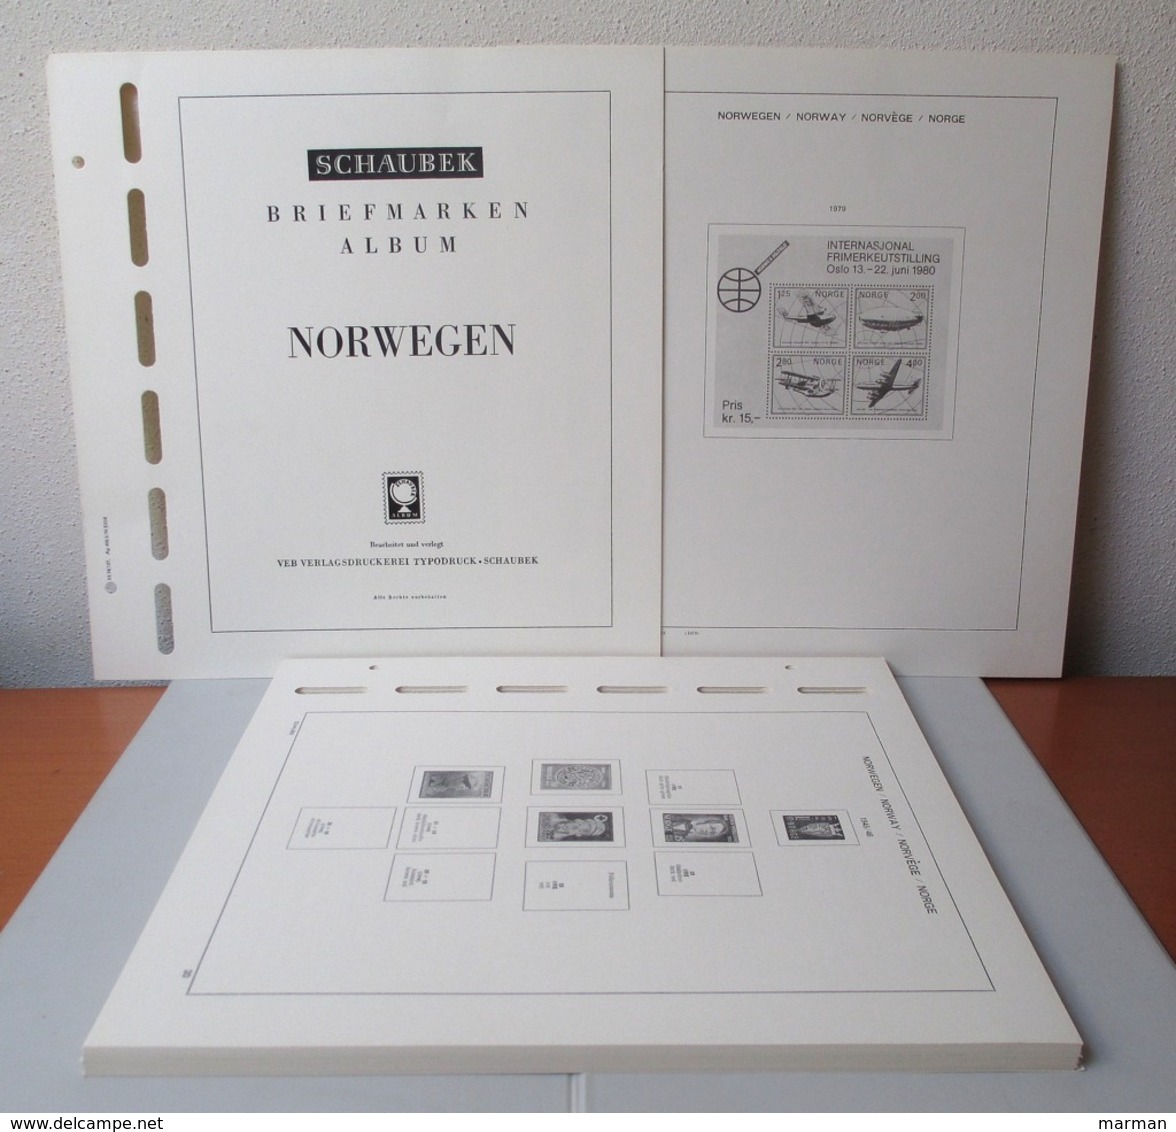 NORVEGIA Norge Norway 1945/1979 Fogli Marca SCHAUBEK (nuovi) - Pre-printed Pages